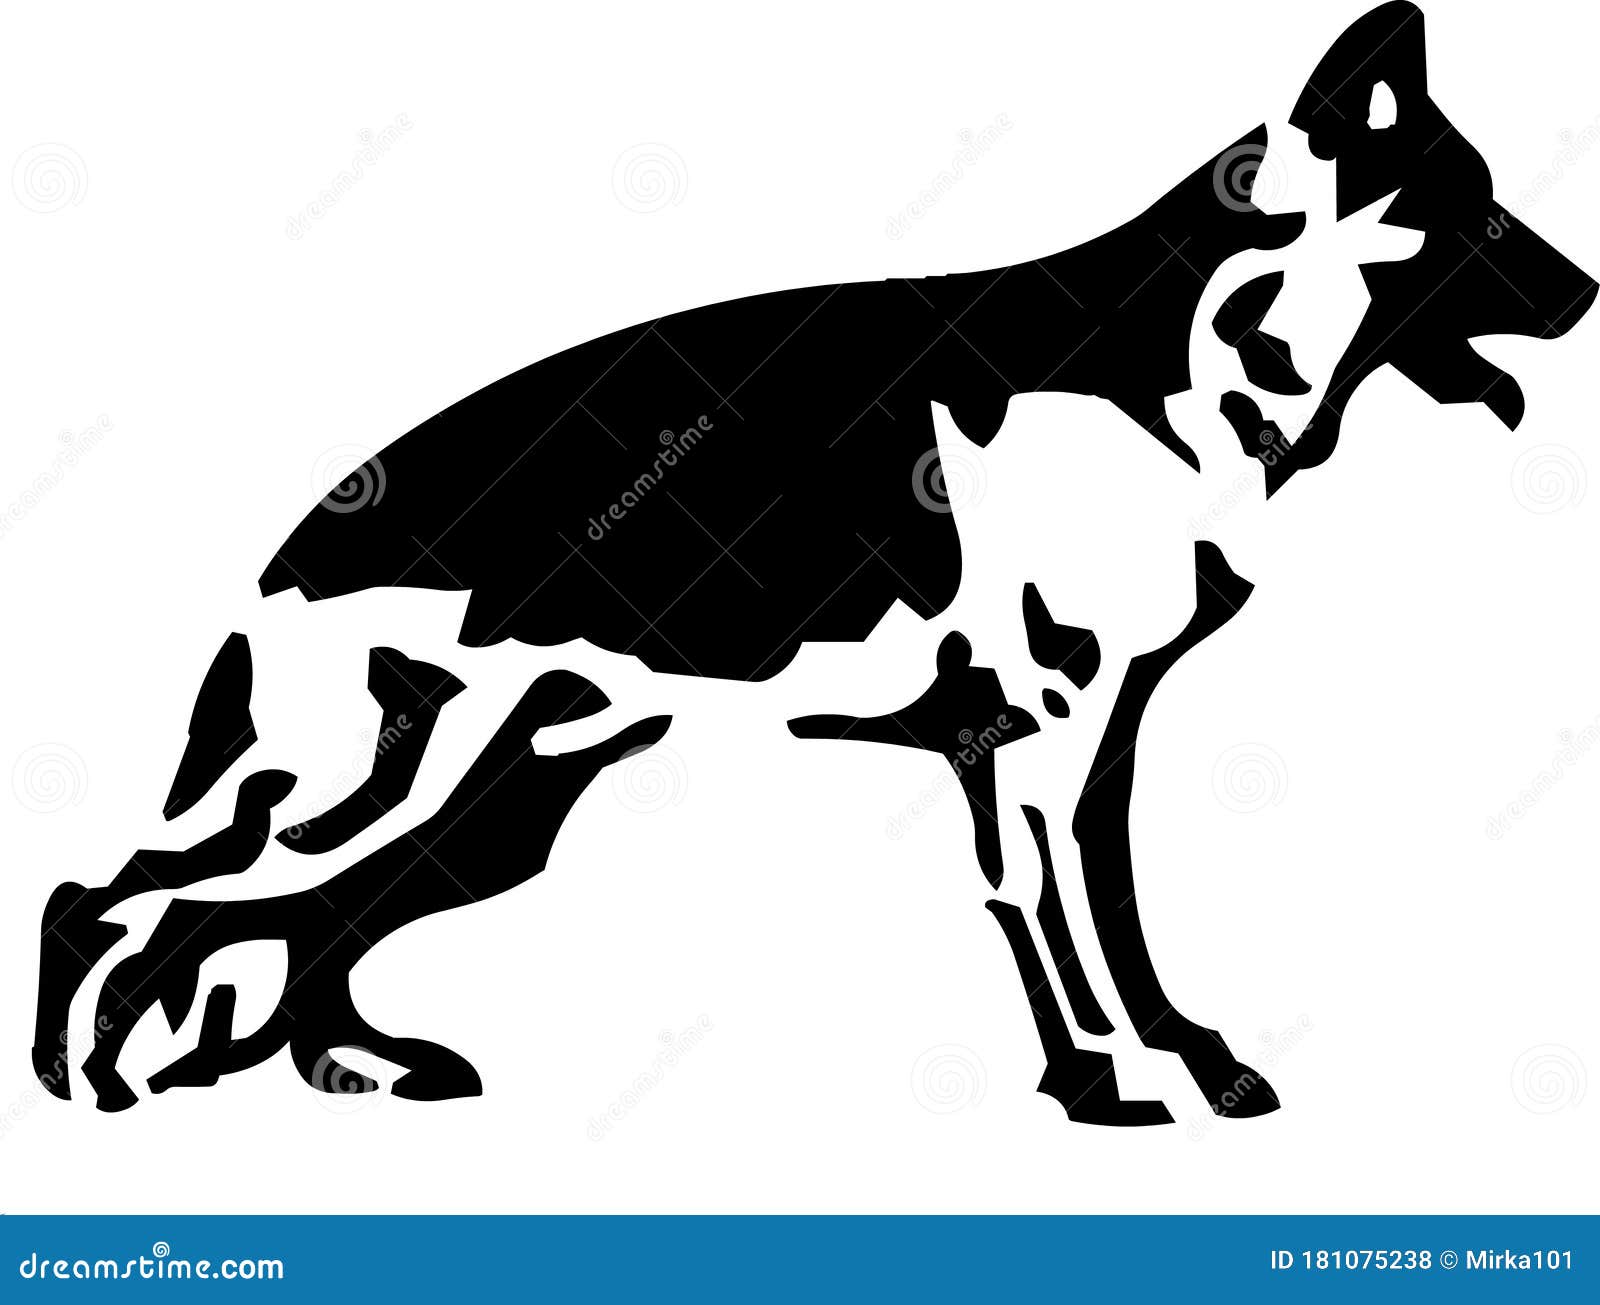 silhouette of a german shepherd dog